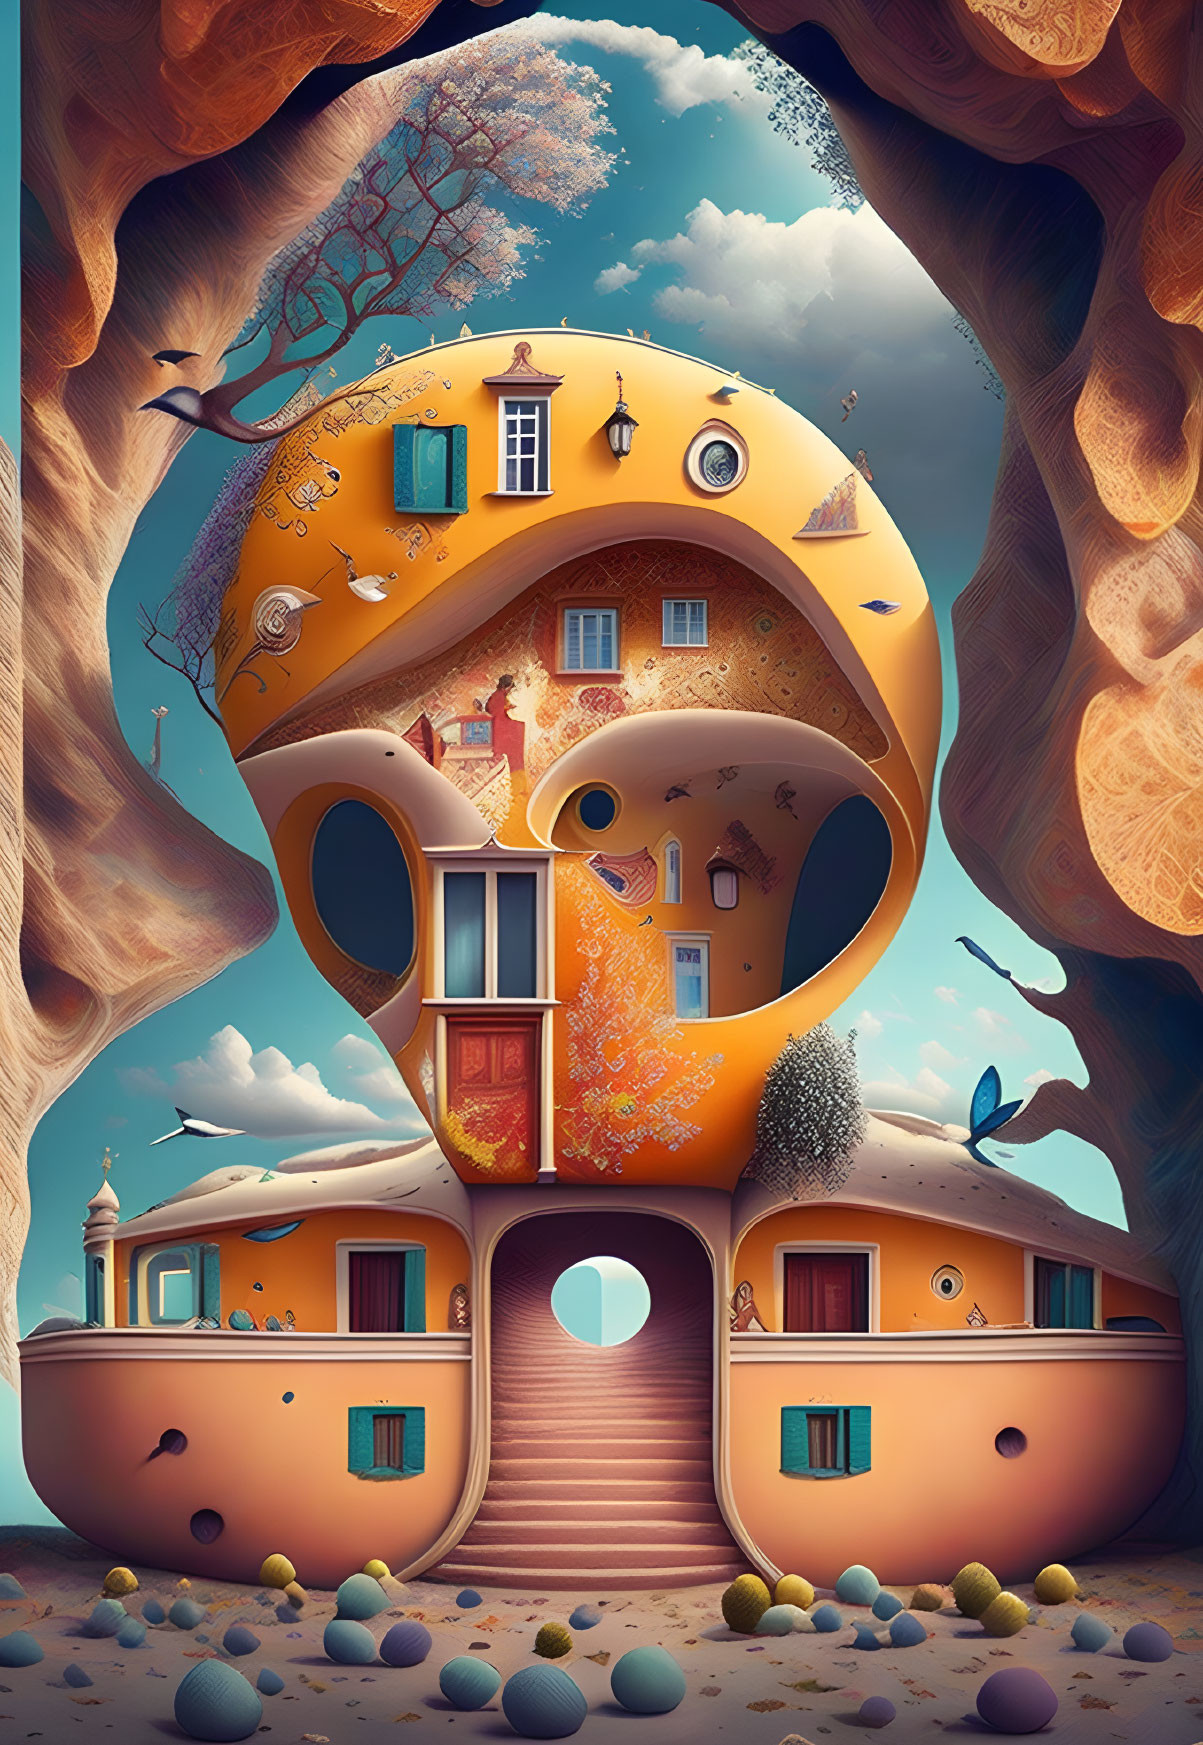 Surreal illustration of musical note-shaped house in fantasy landscape